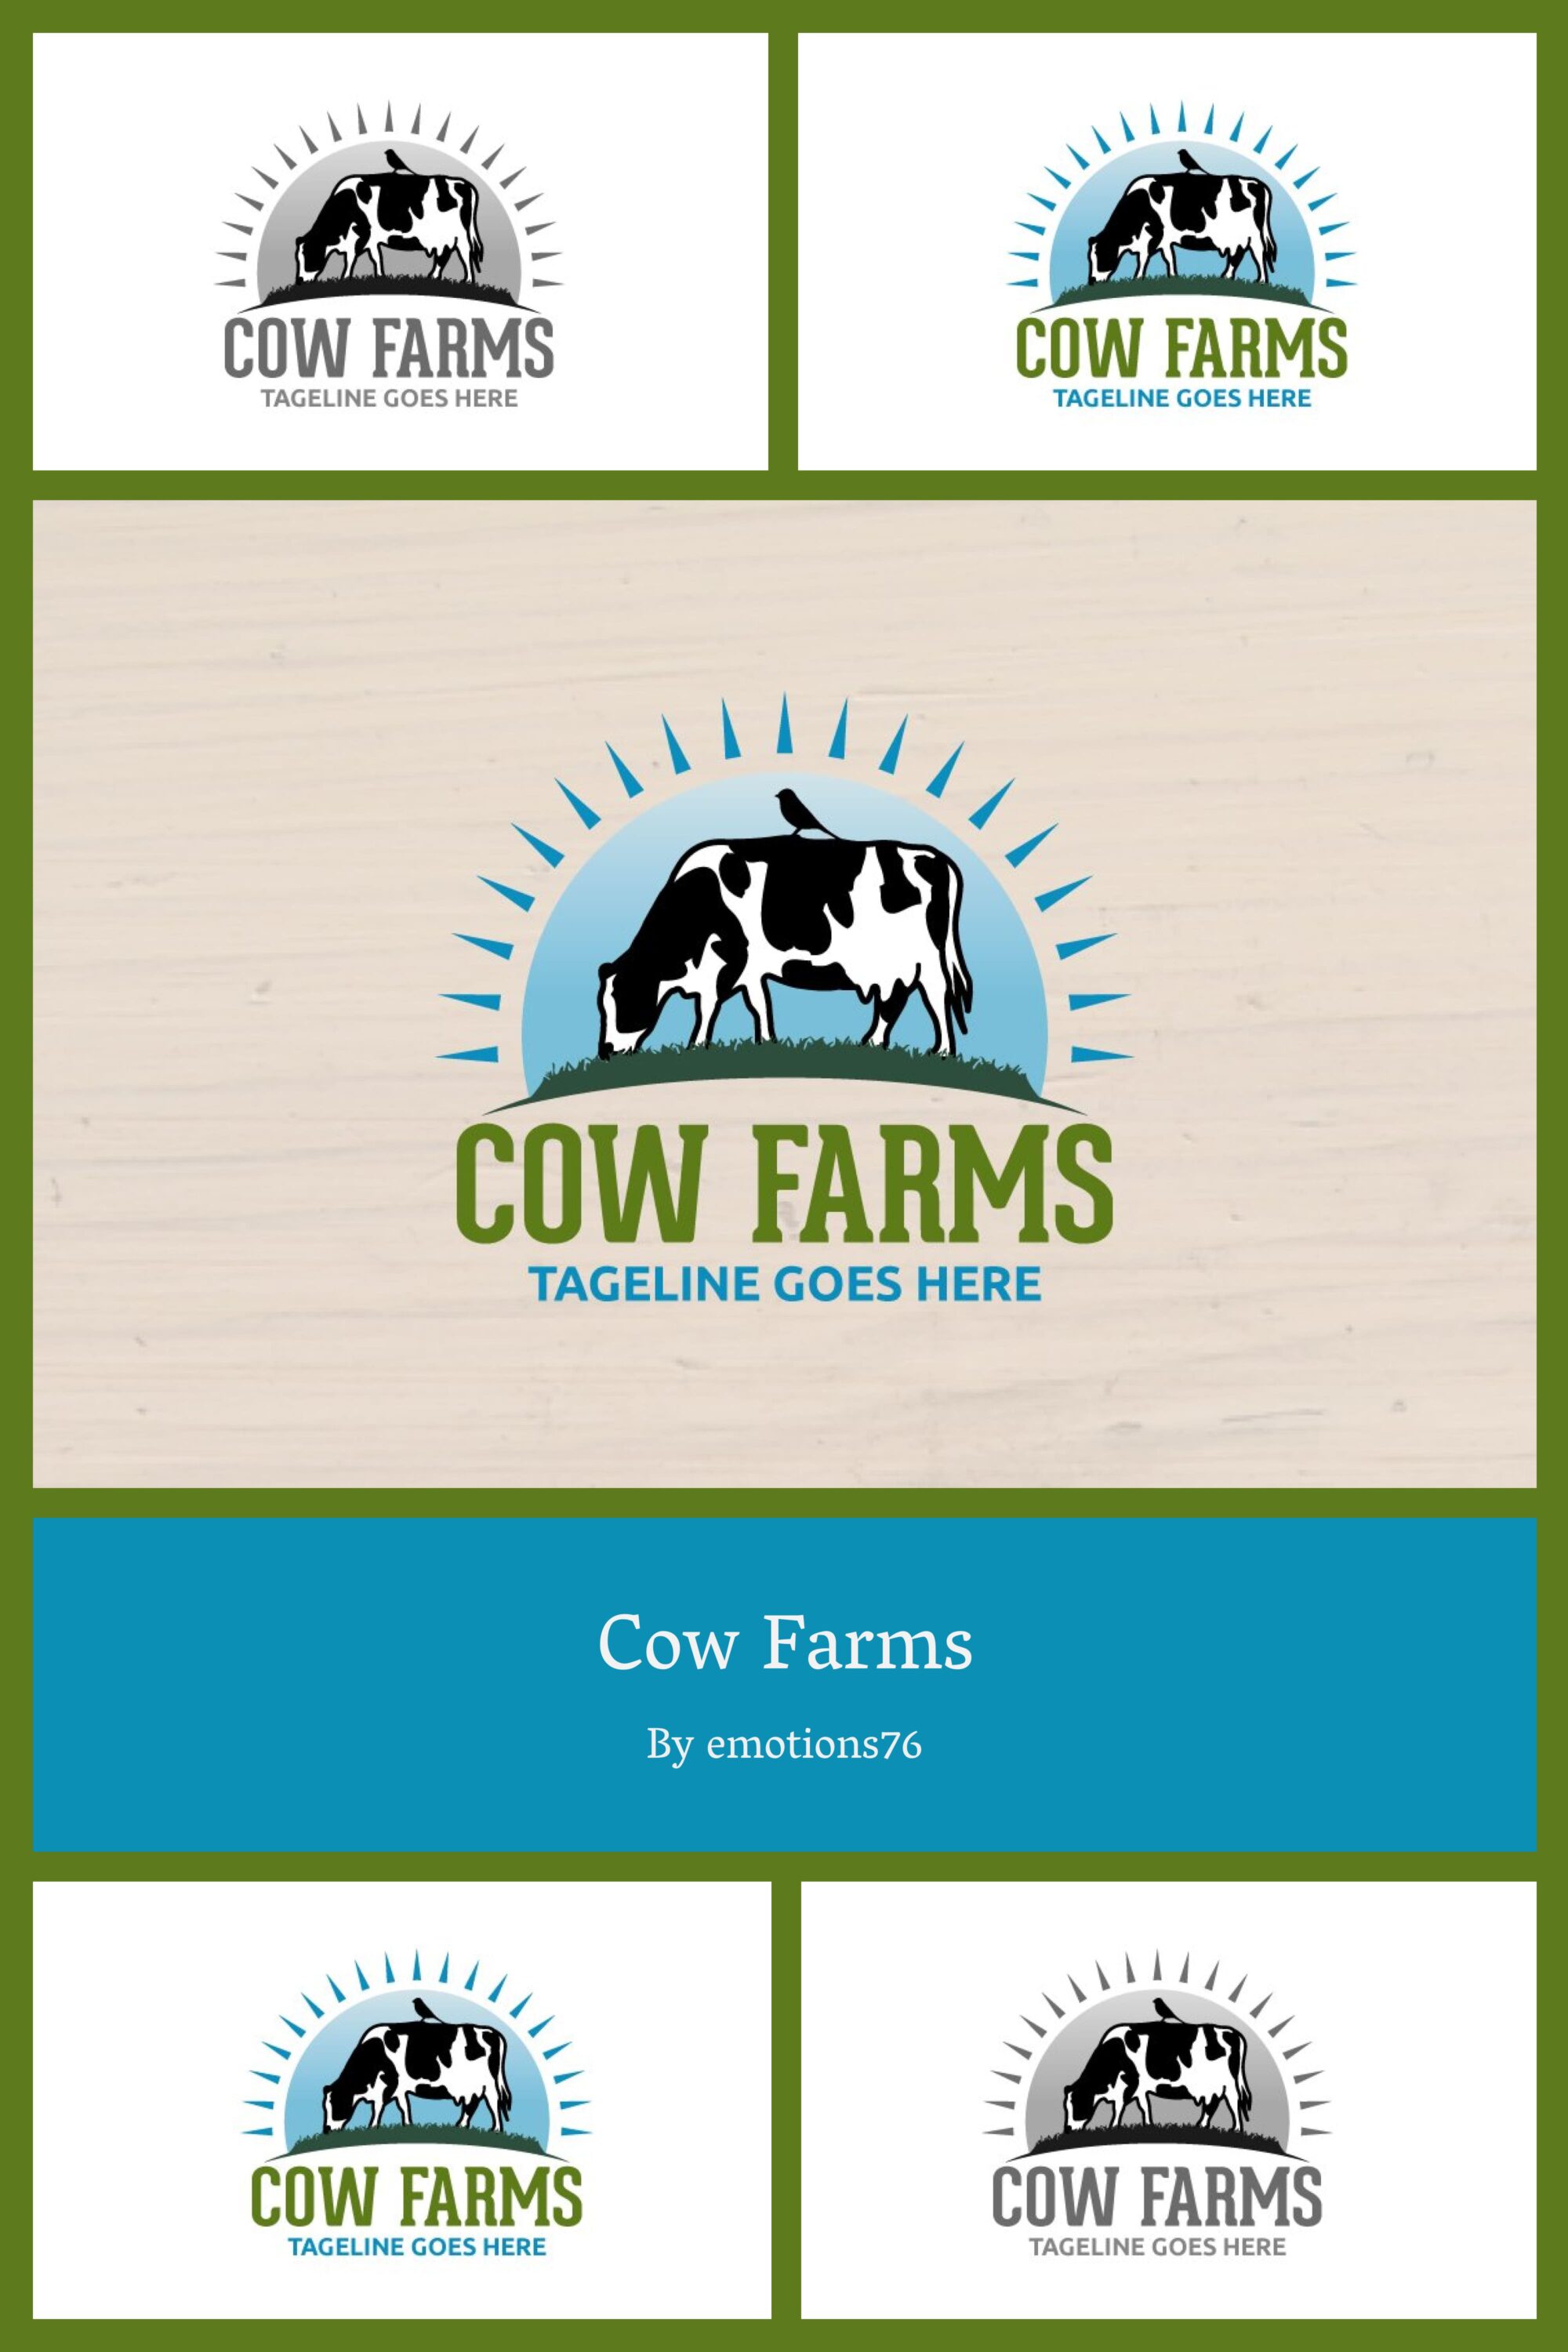 cow farms 03 338